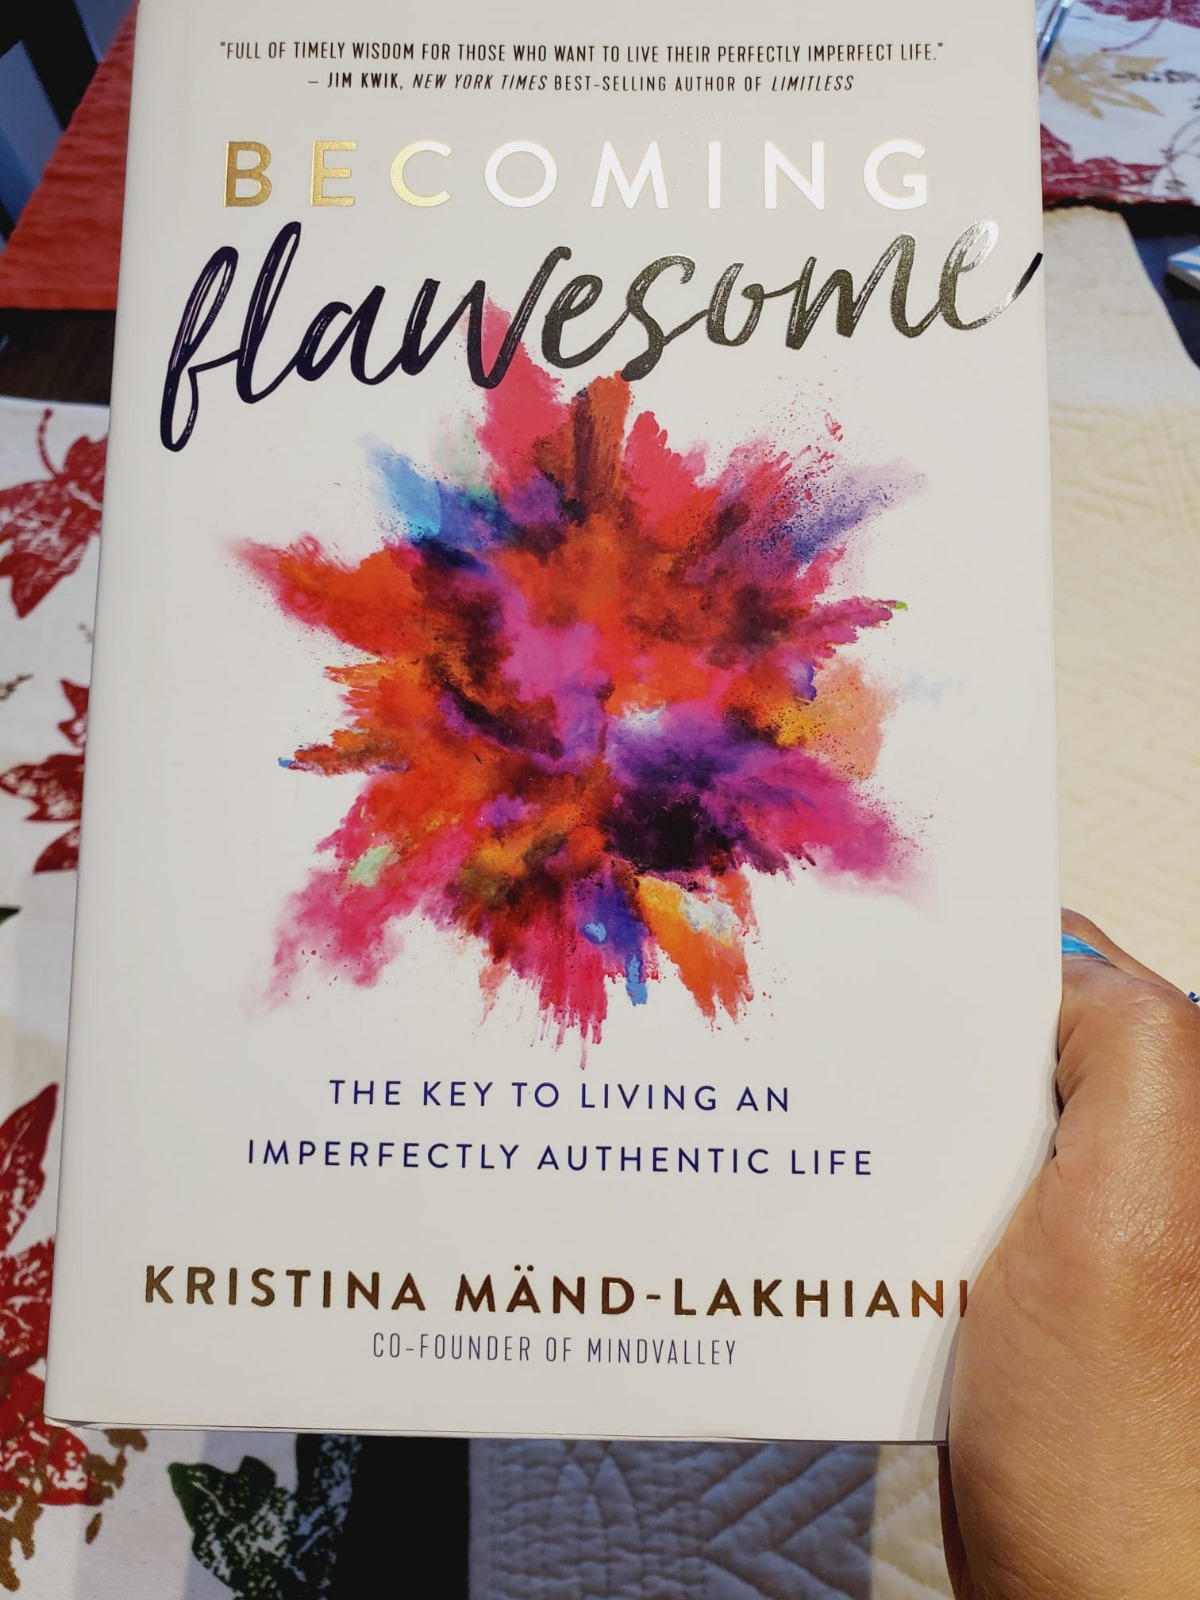 Becoming Flawesome”, Kristina Mand Lakhiani